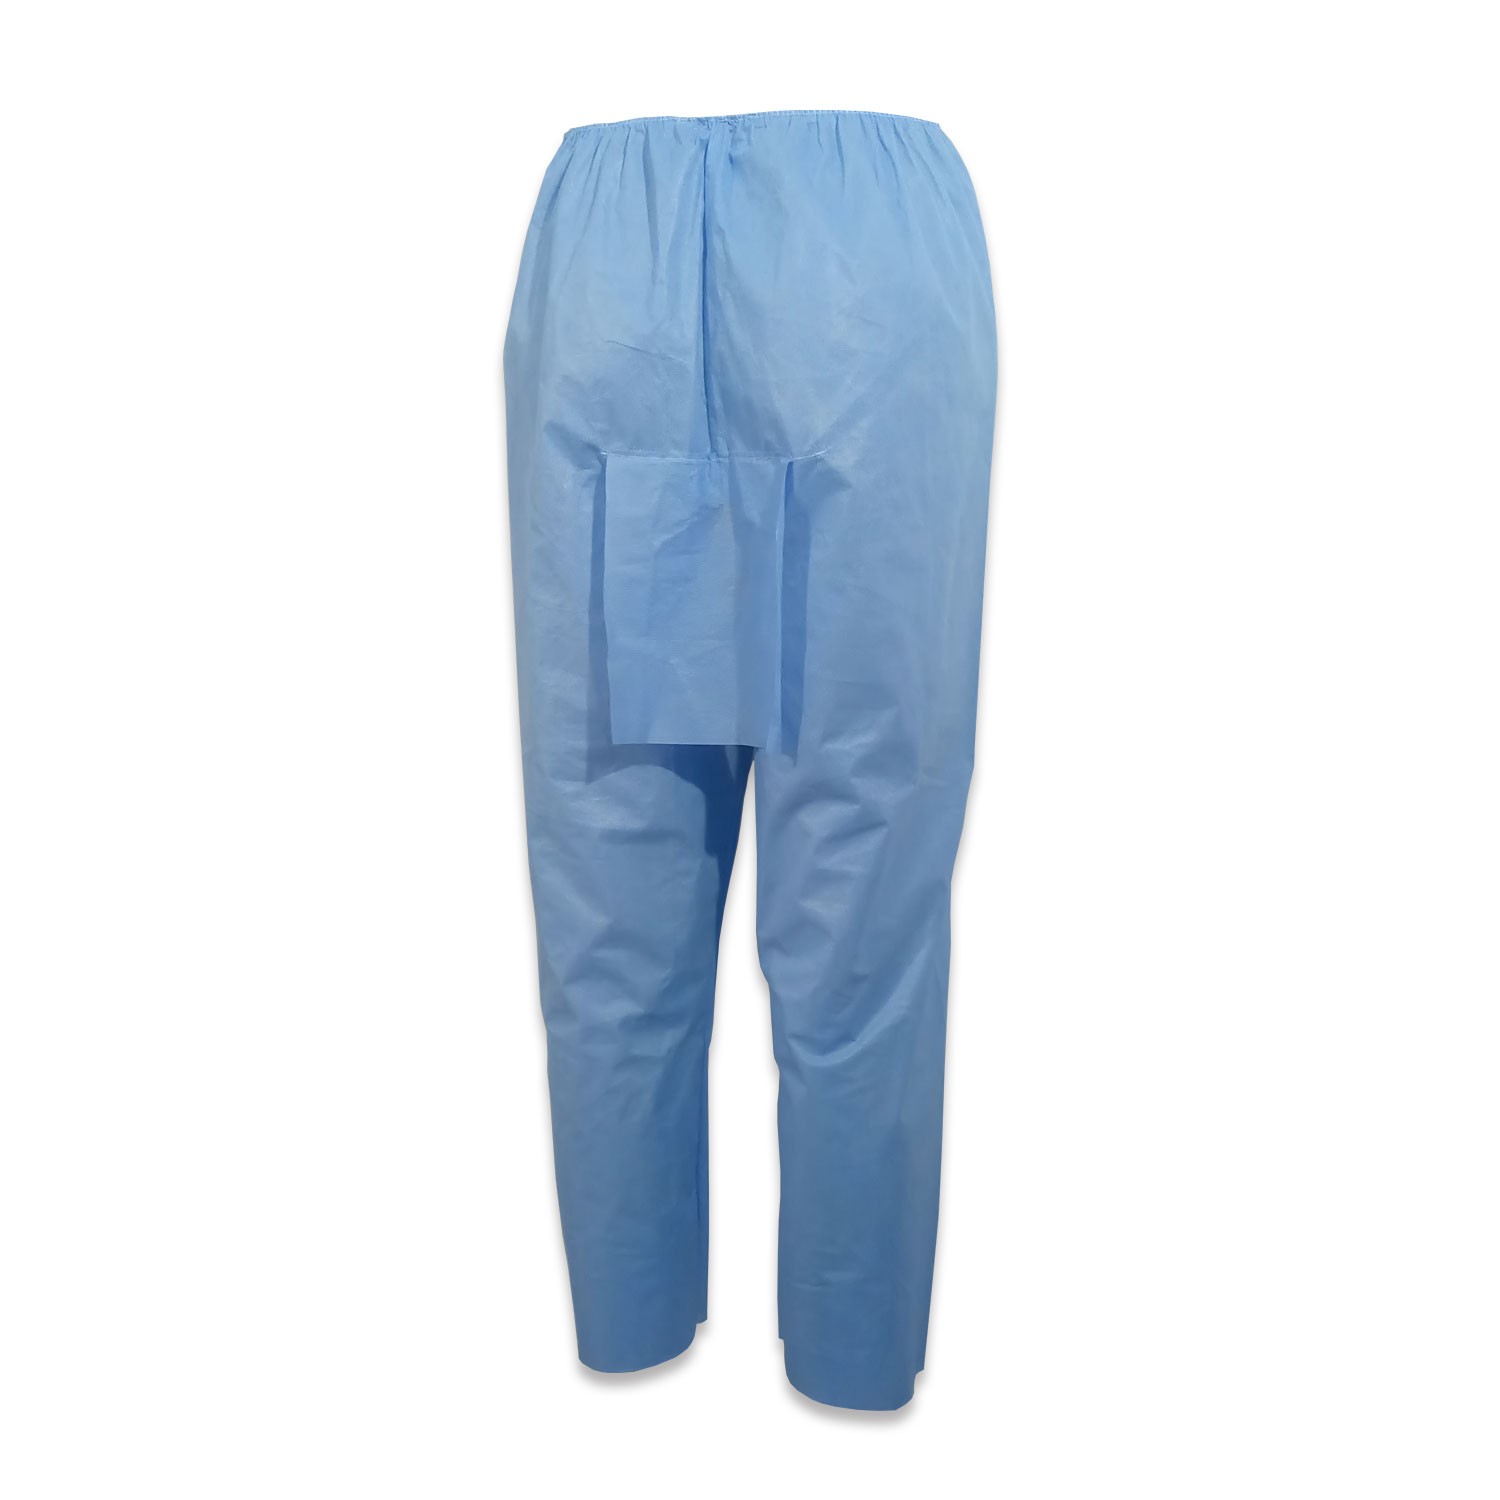 Pantalon de Coloscopie Sms Bleu Xlarge